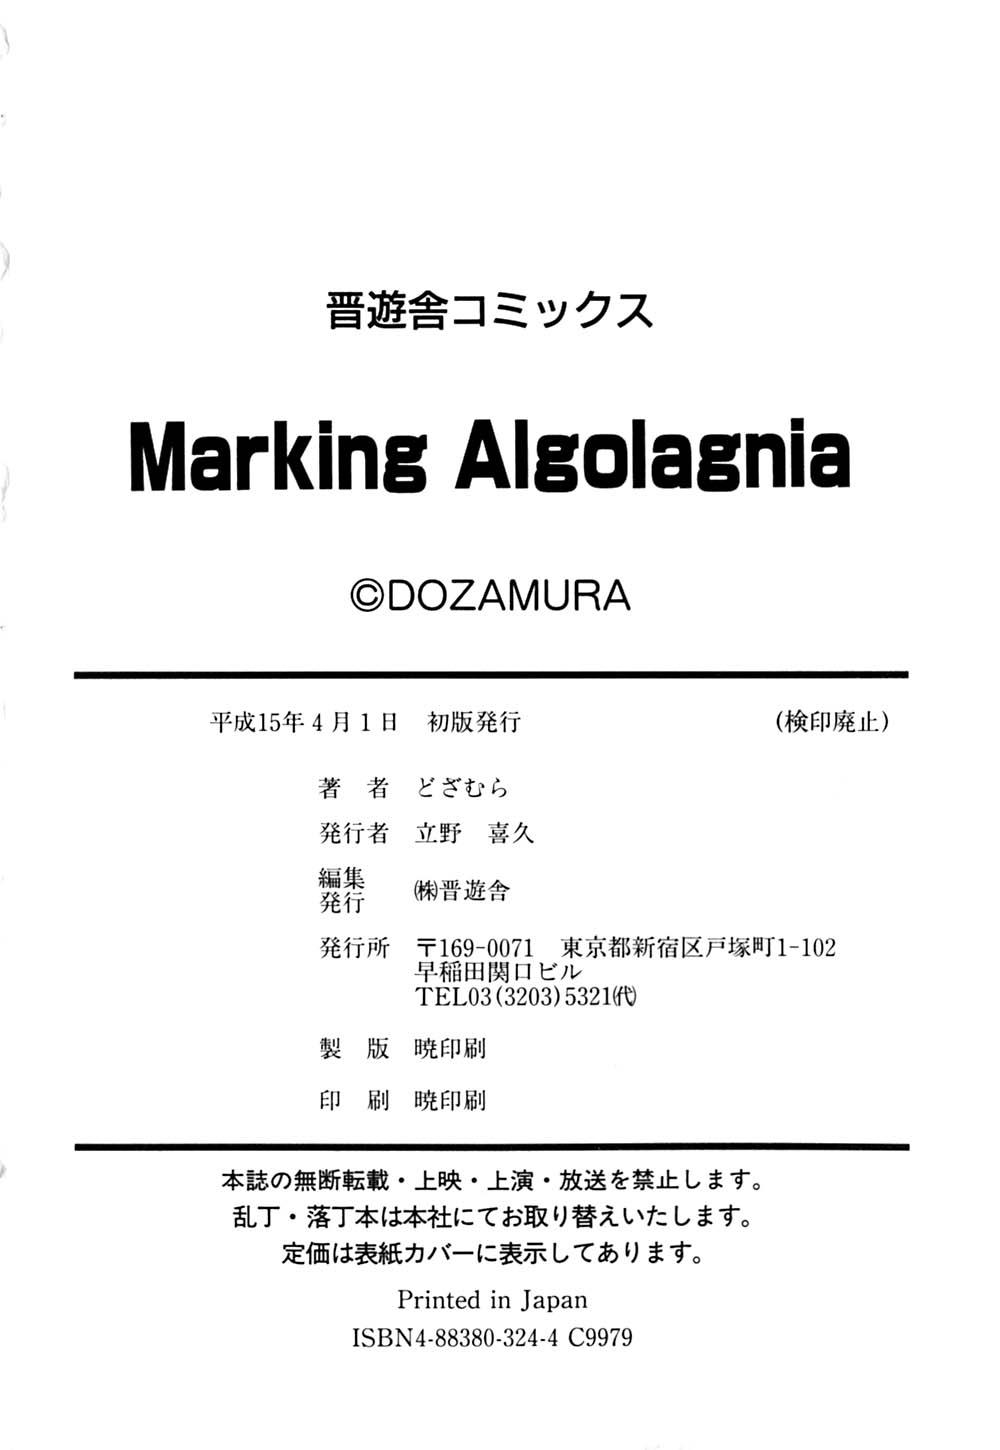 Marking Algolagnia 185